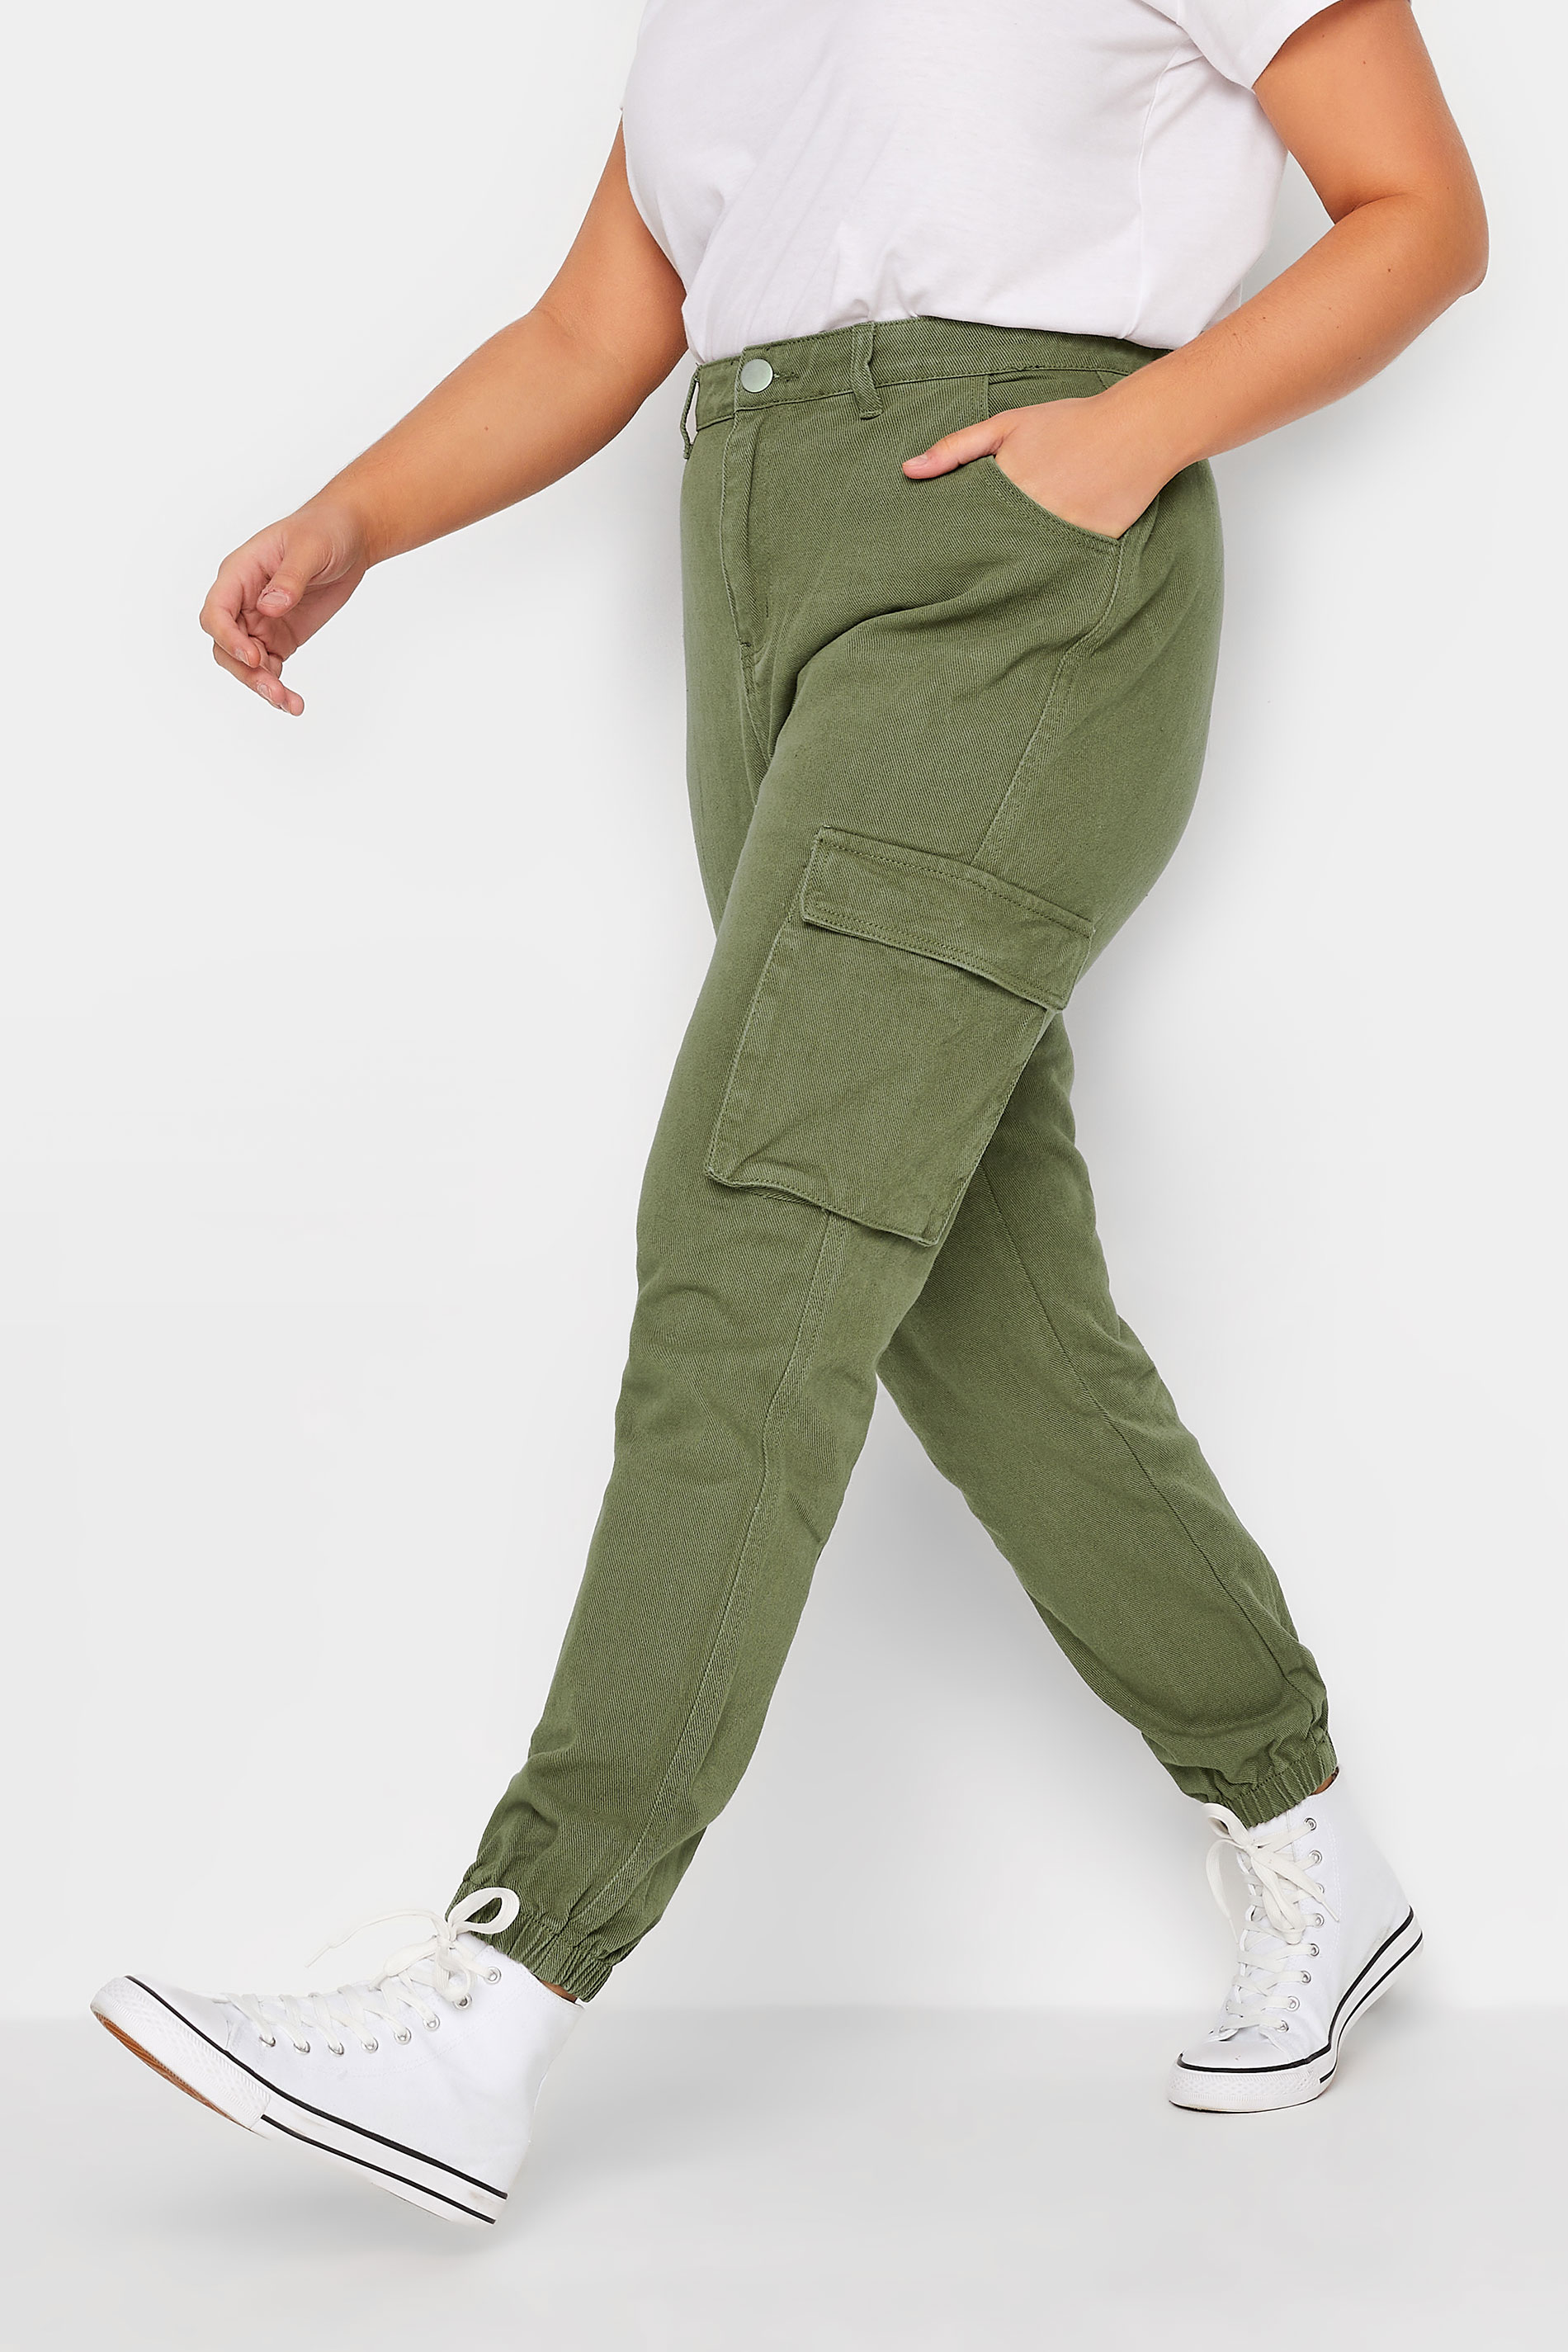 Plus Size Khaki Green Cargo Pocket Jeans | Yours Clothing  1